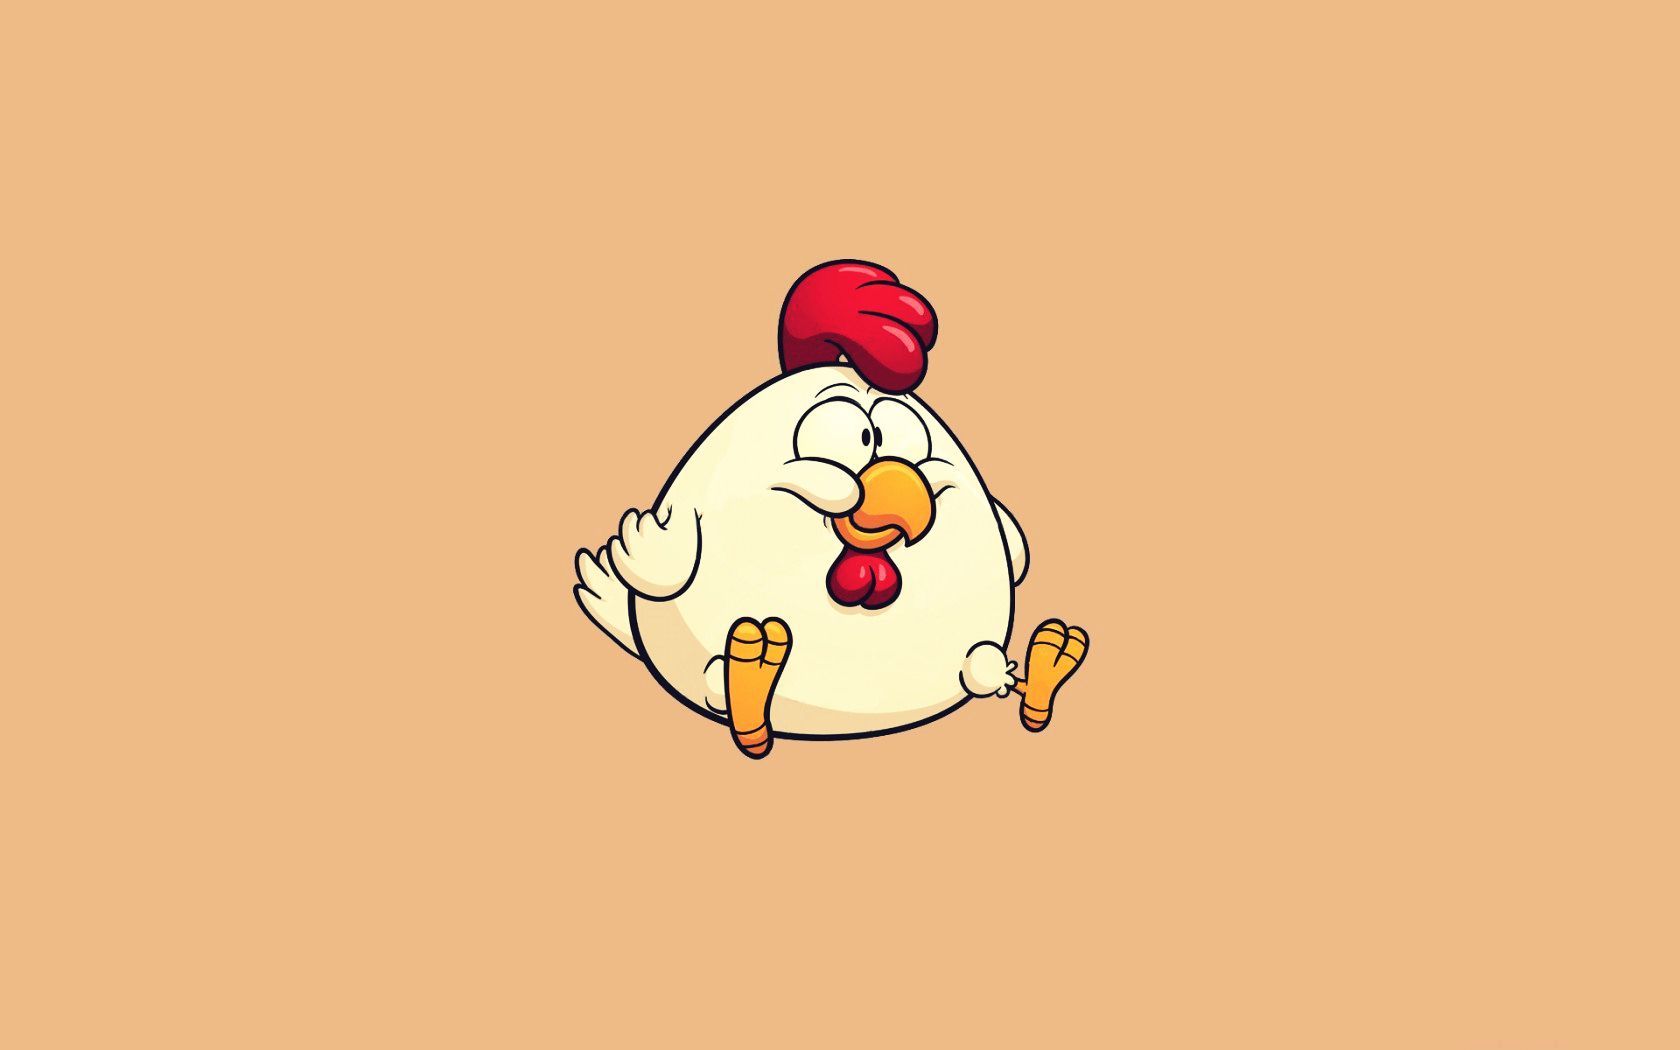 Chicken Cartoon Image. HD Wallpaper Image